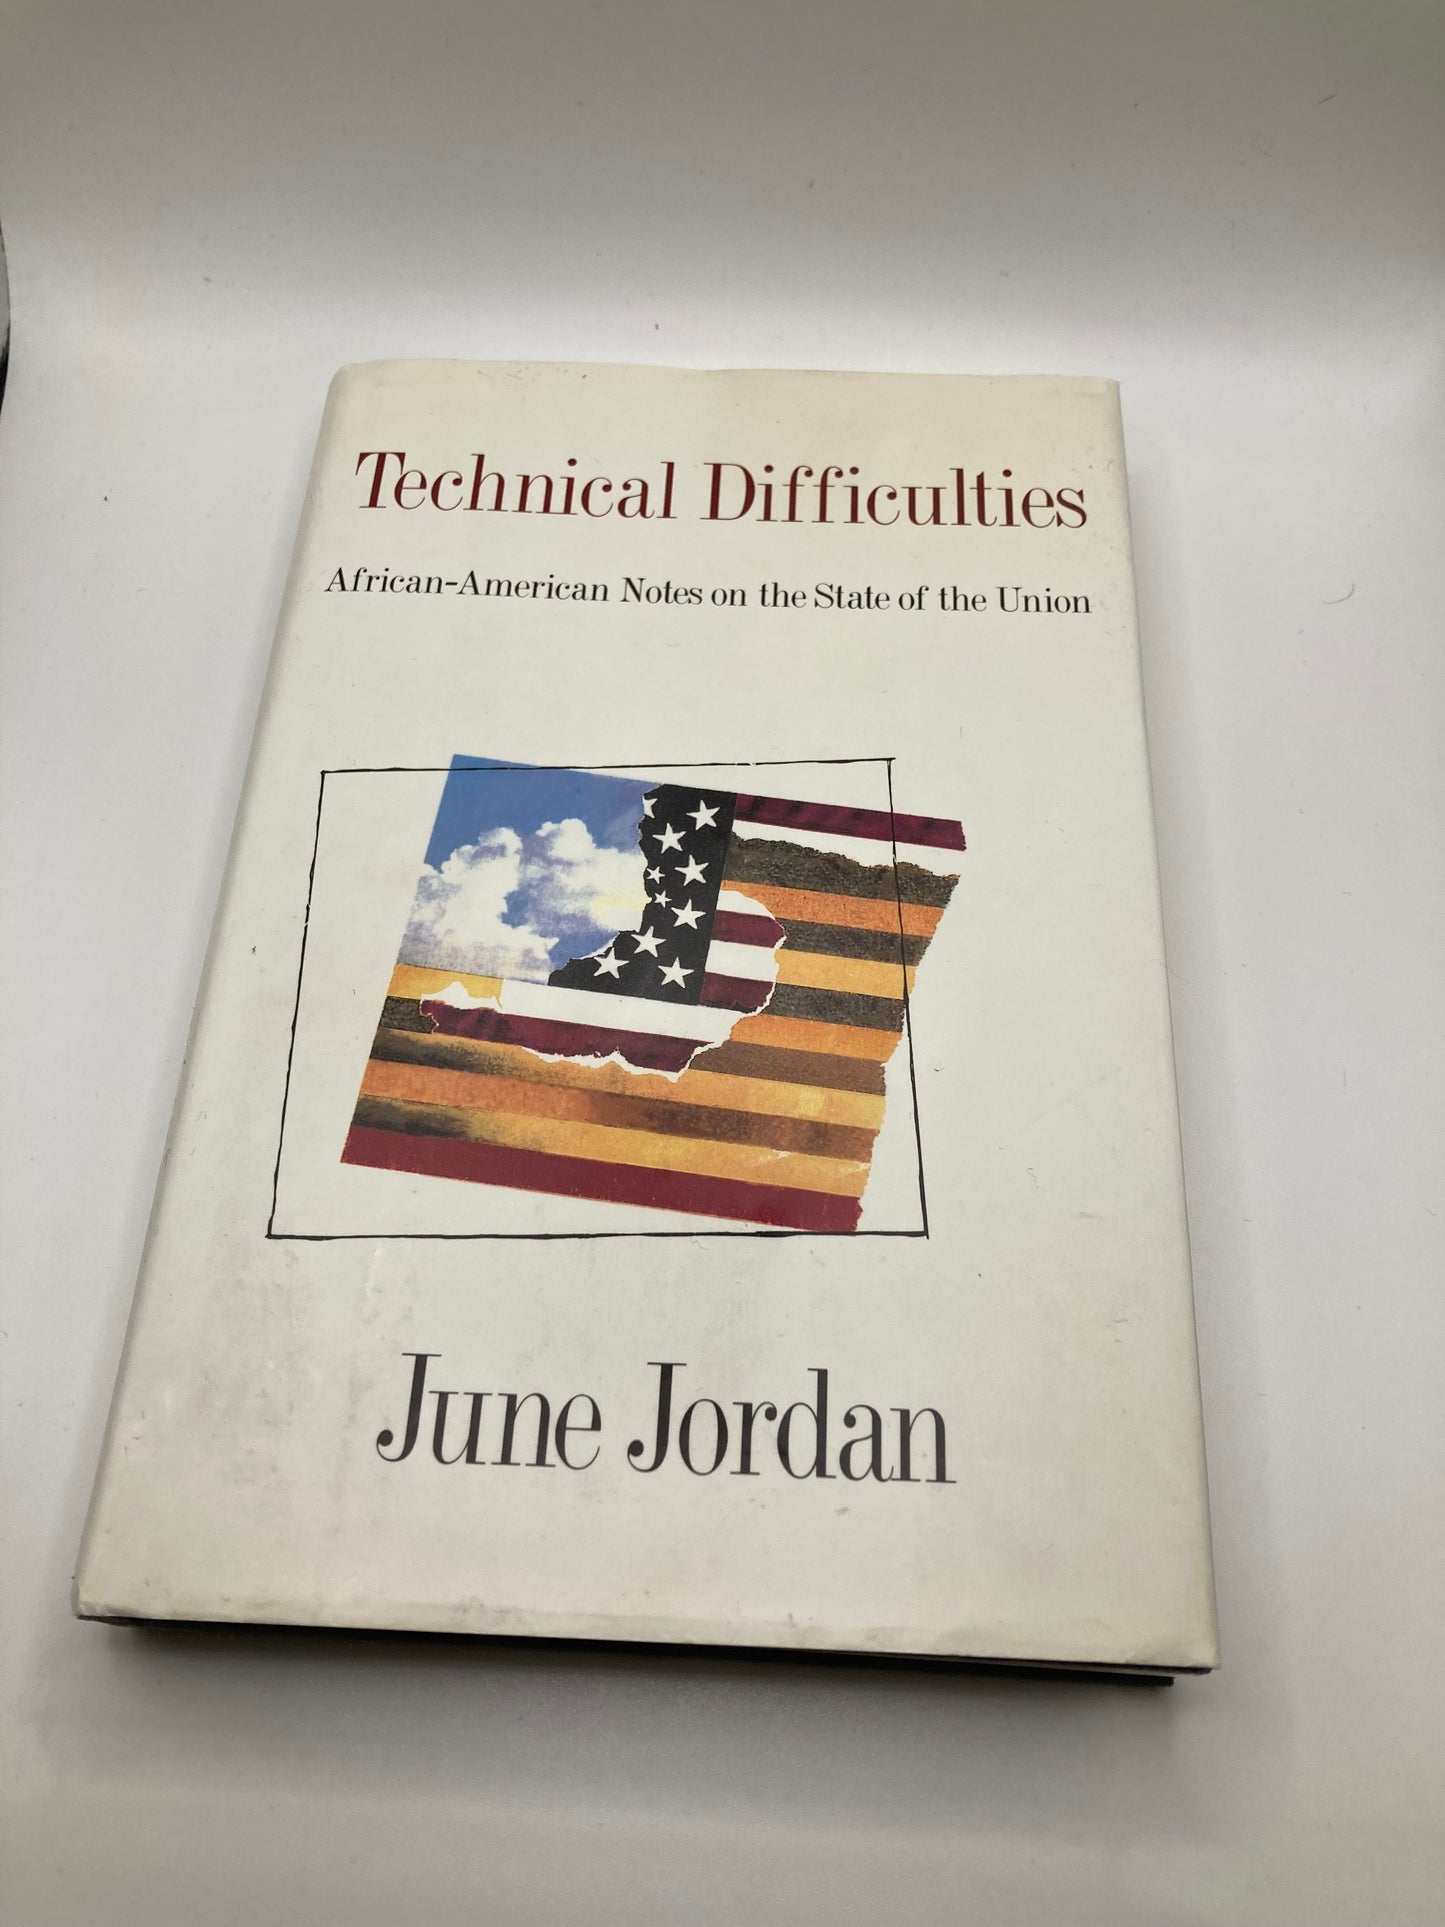 Technical Difficulties by June Jordan